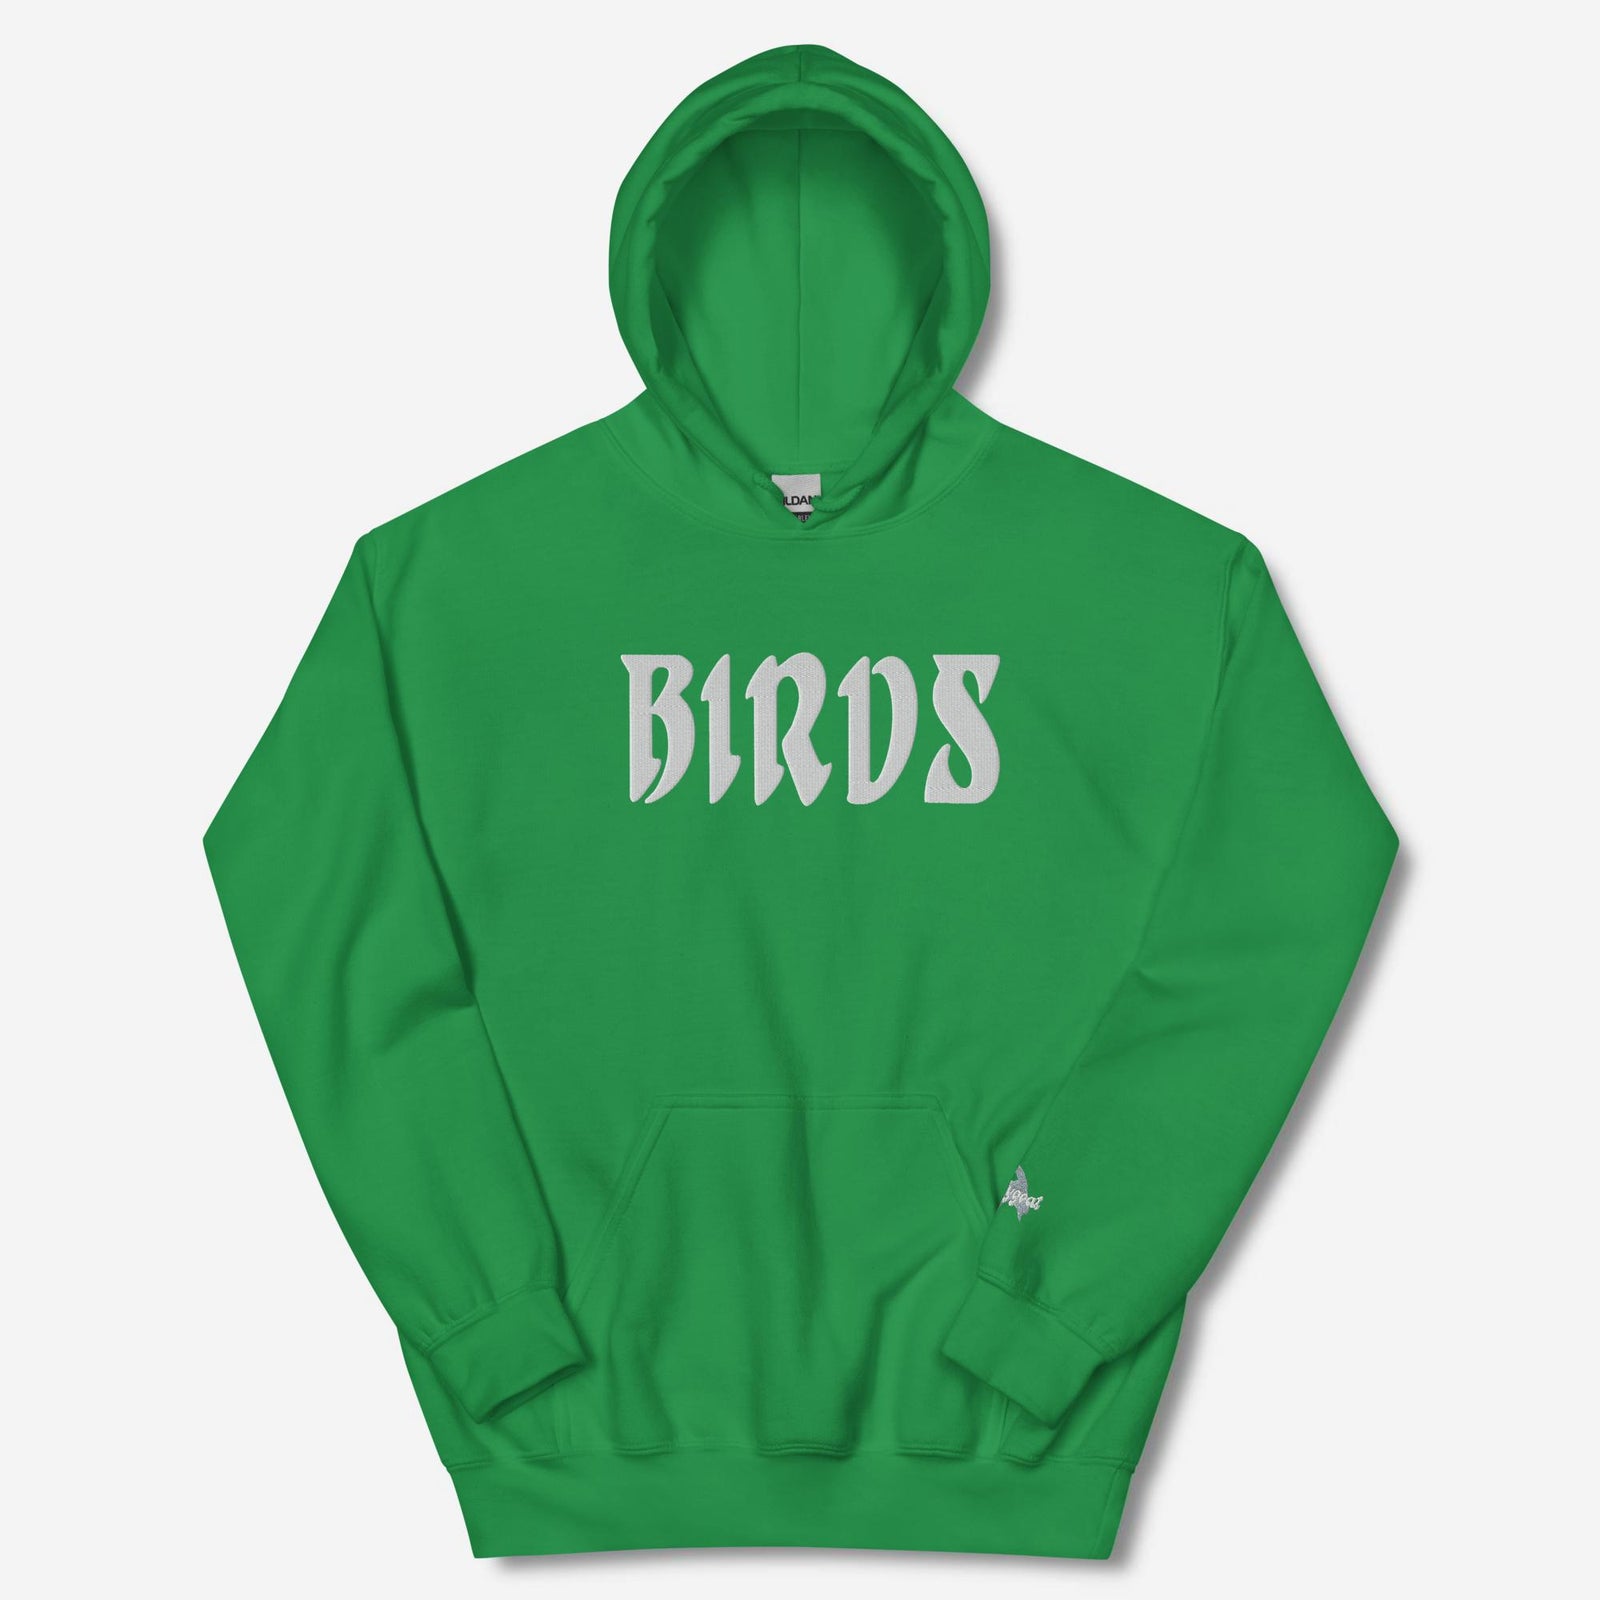 "BIRDS" Emboidered Hoodie